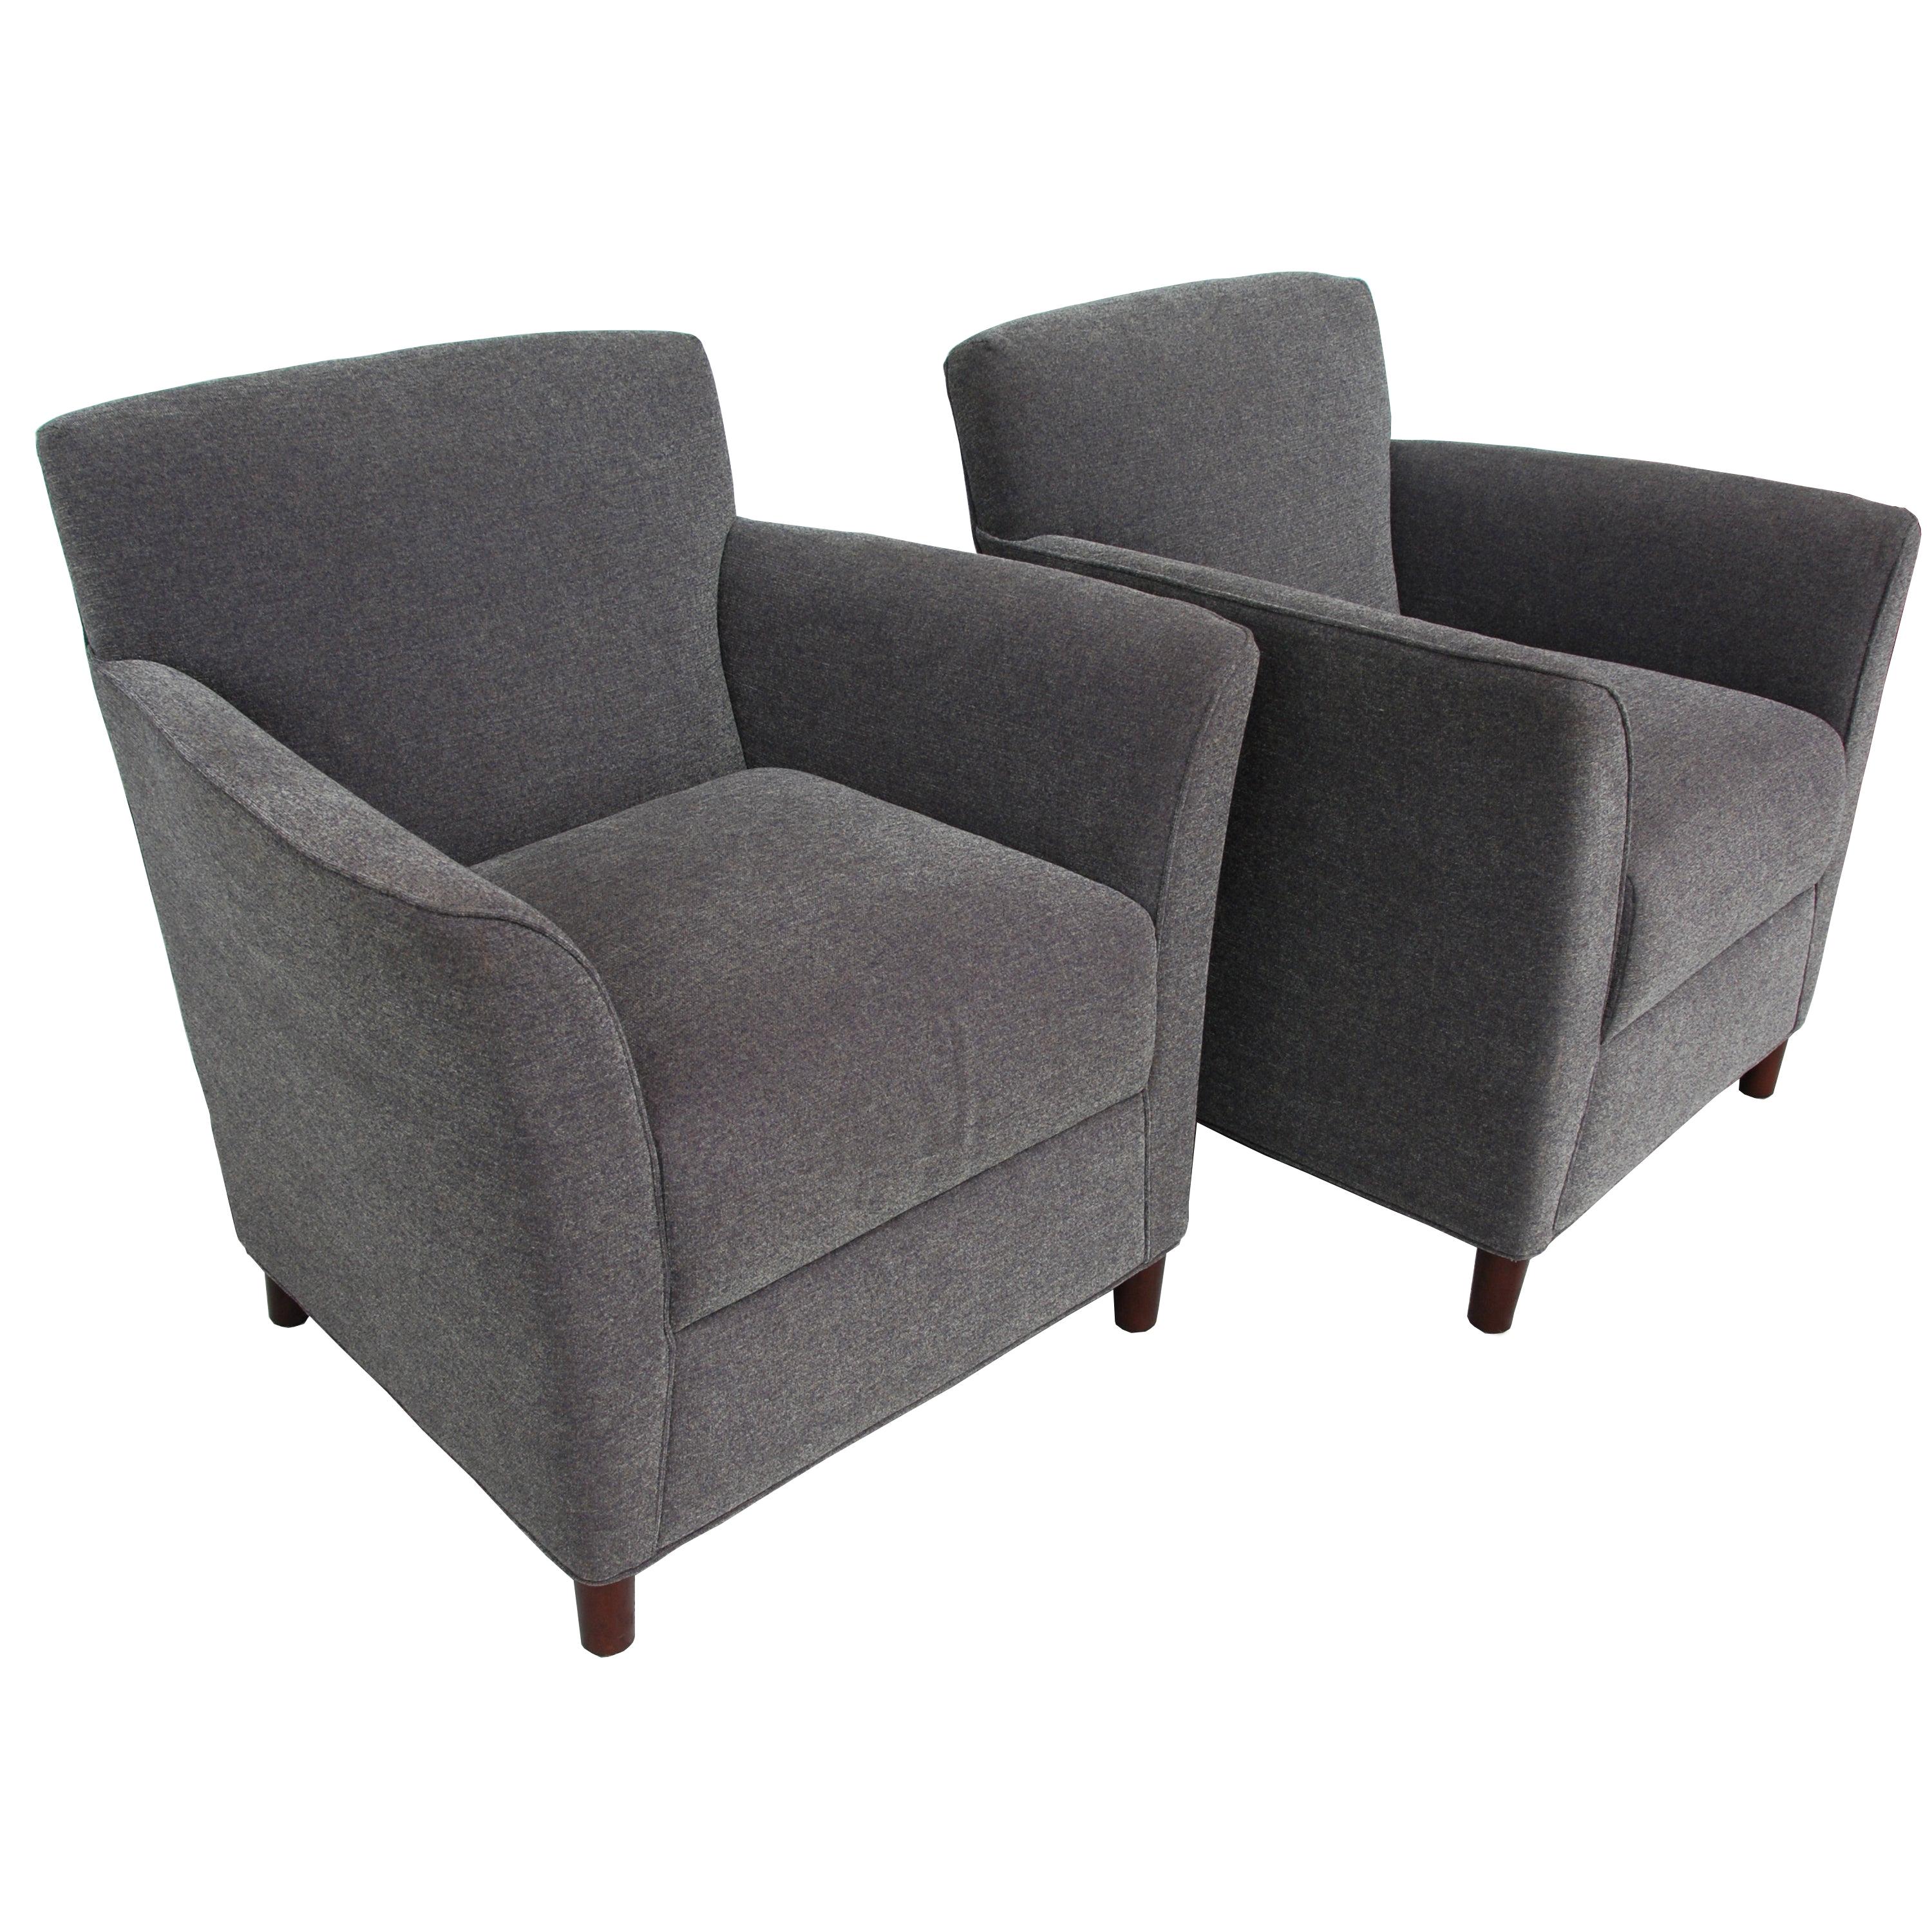 Pair of Moleskin Lounge Chairs by Bernhardt Furniture